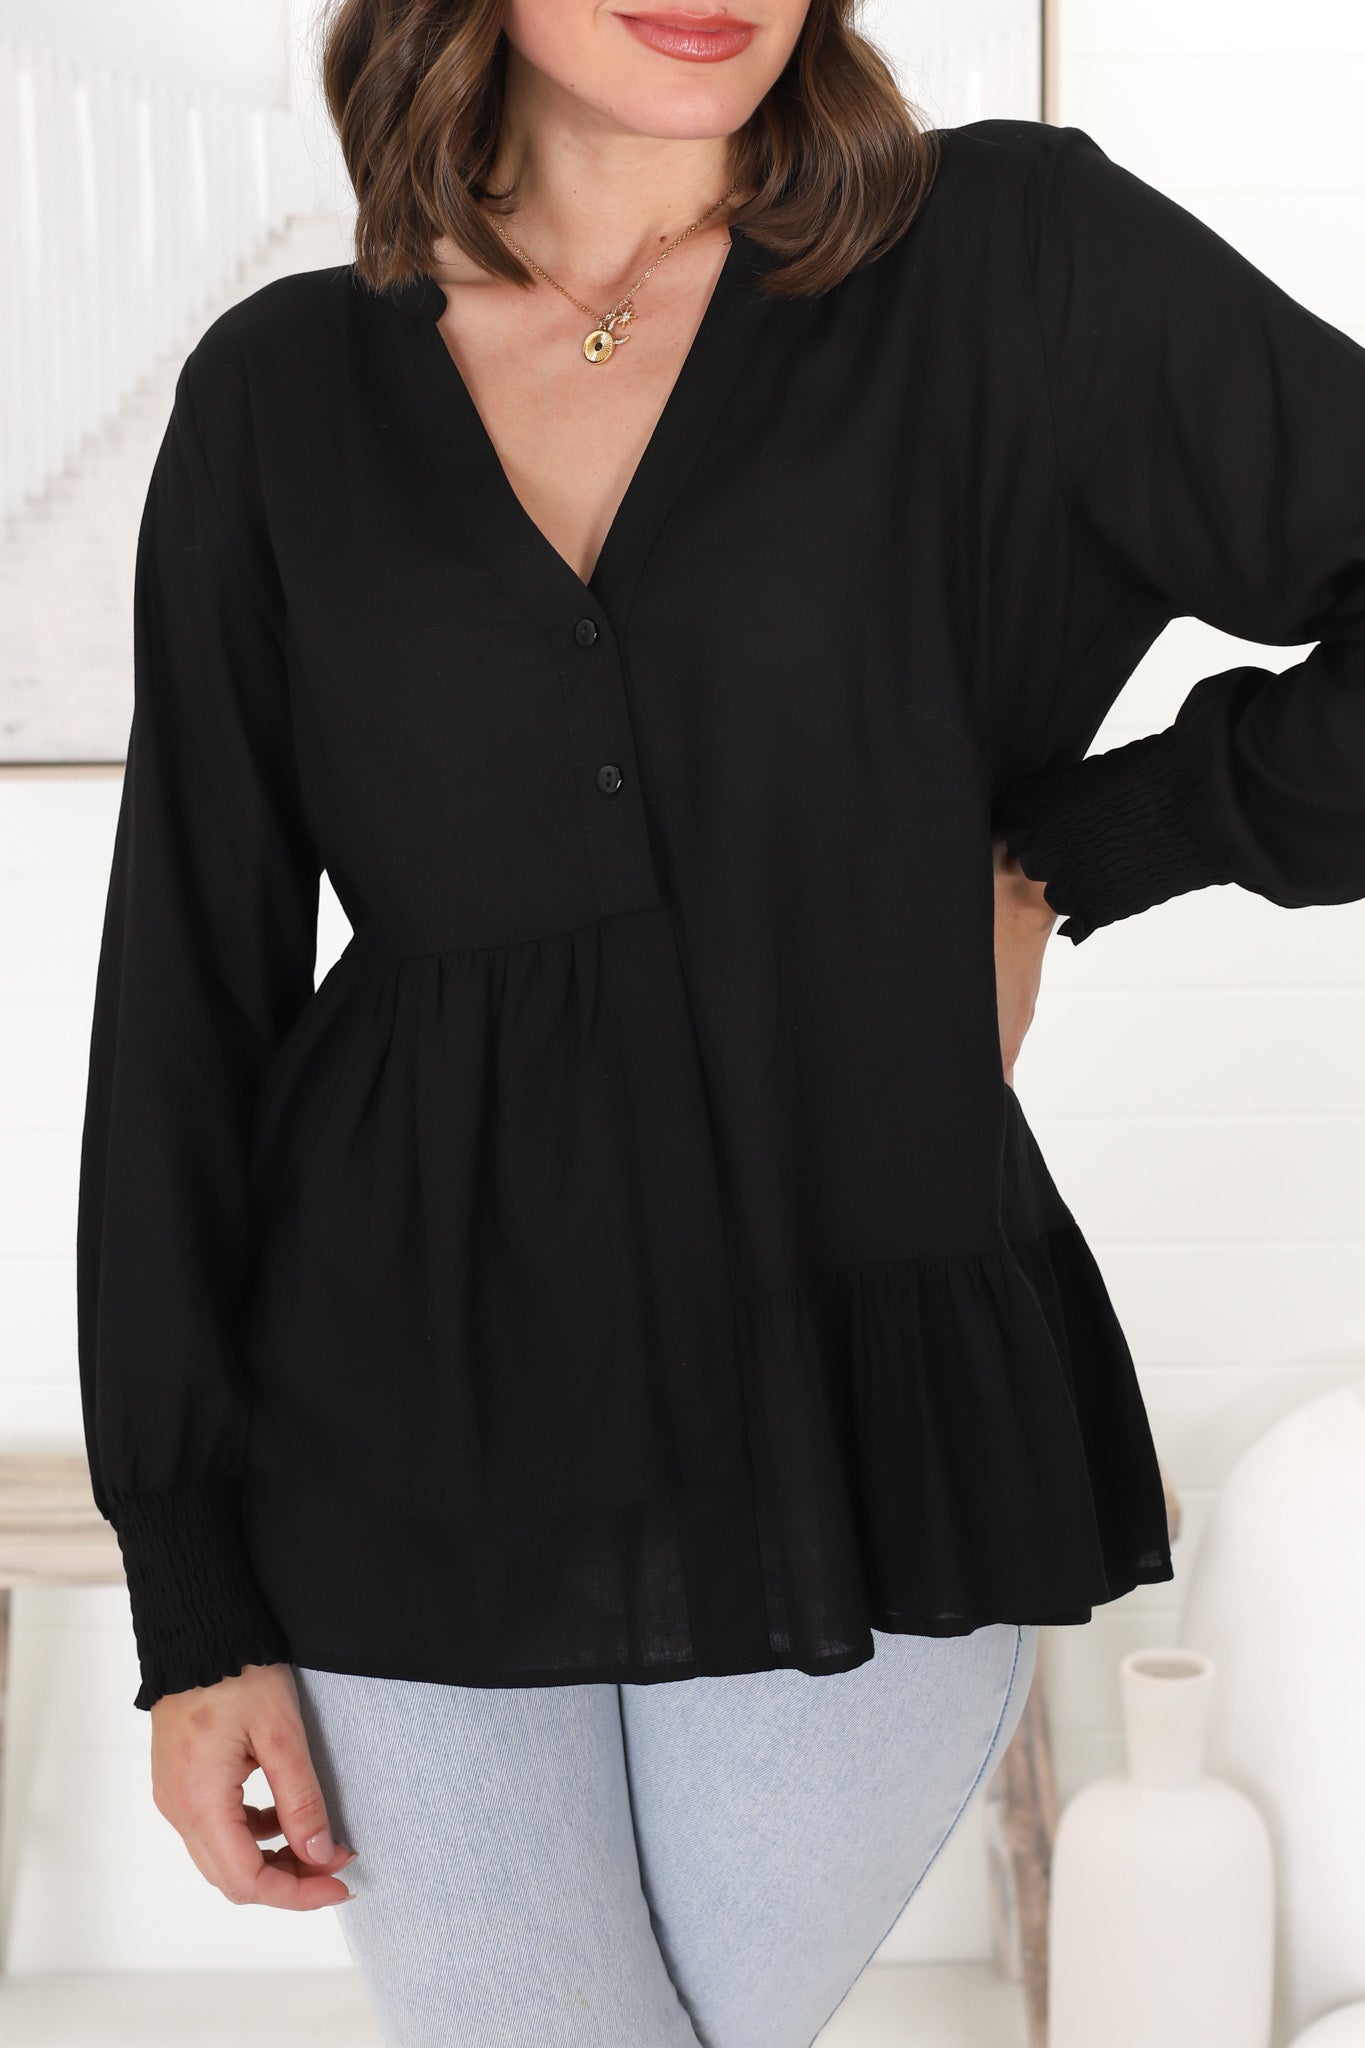 Nell Linen Top - A-Symmetric Detailed Button Down Shirt in Black